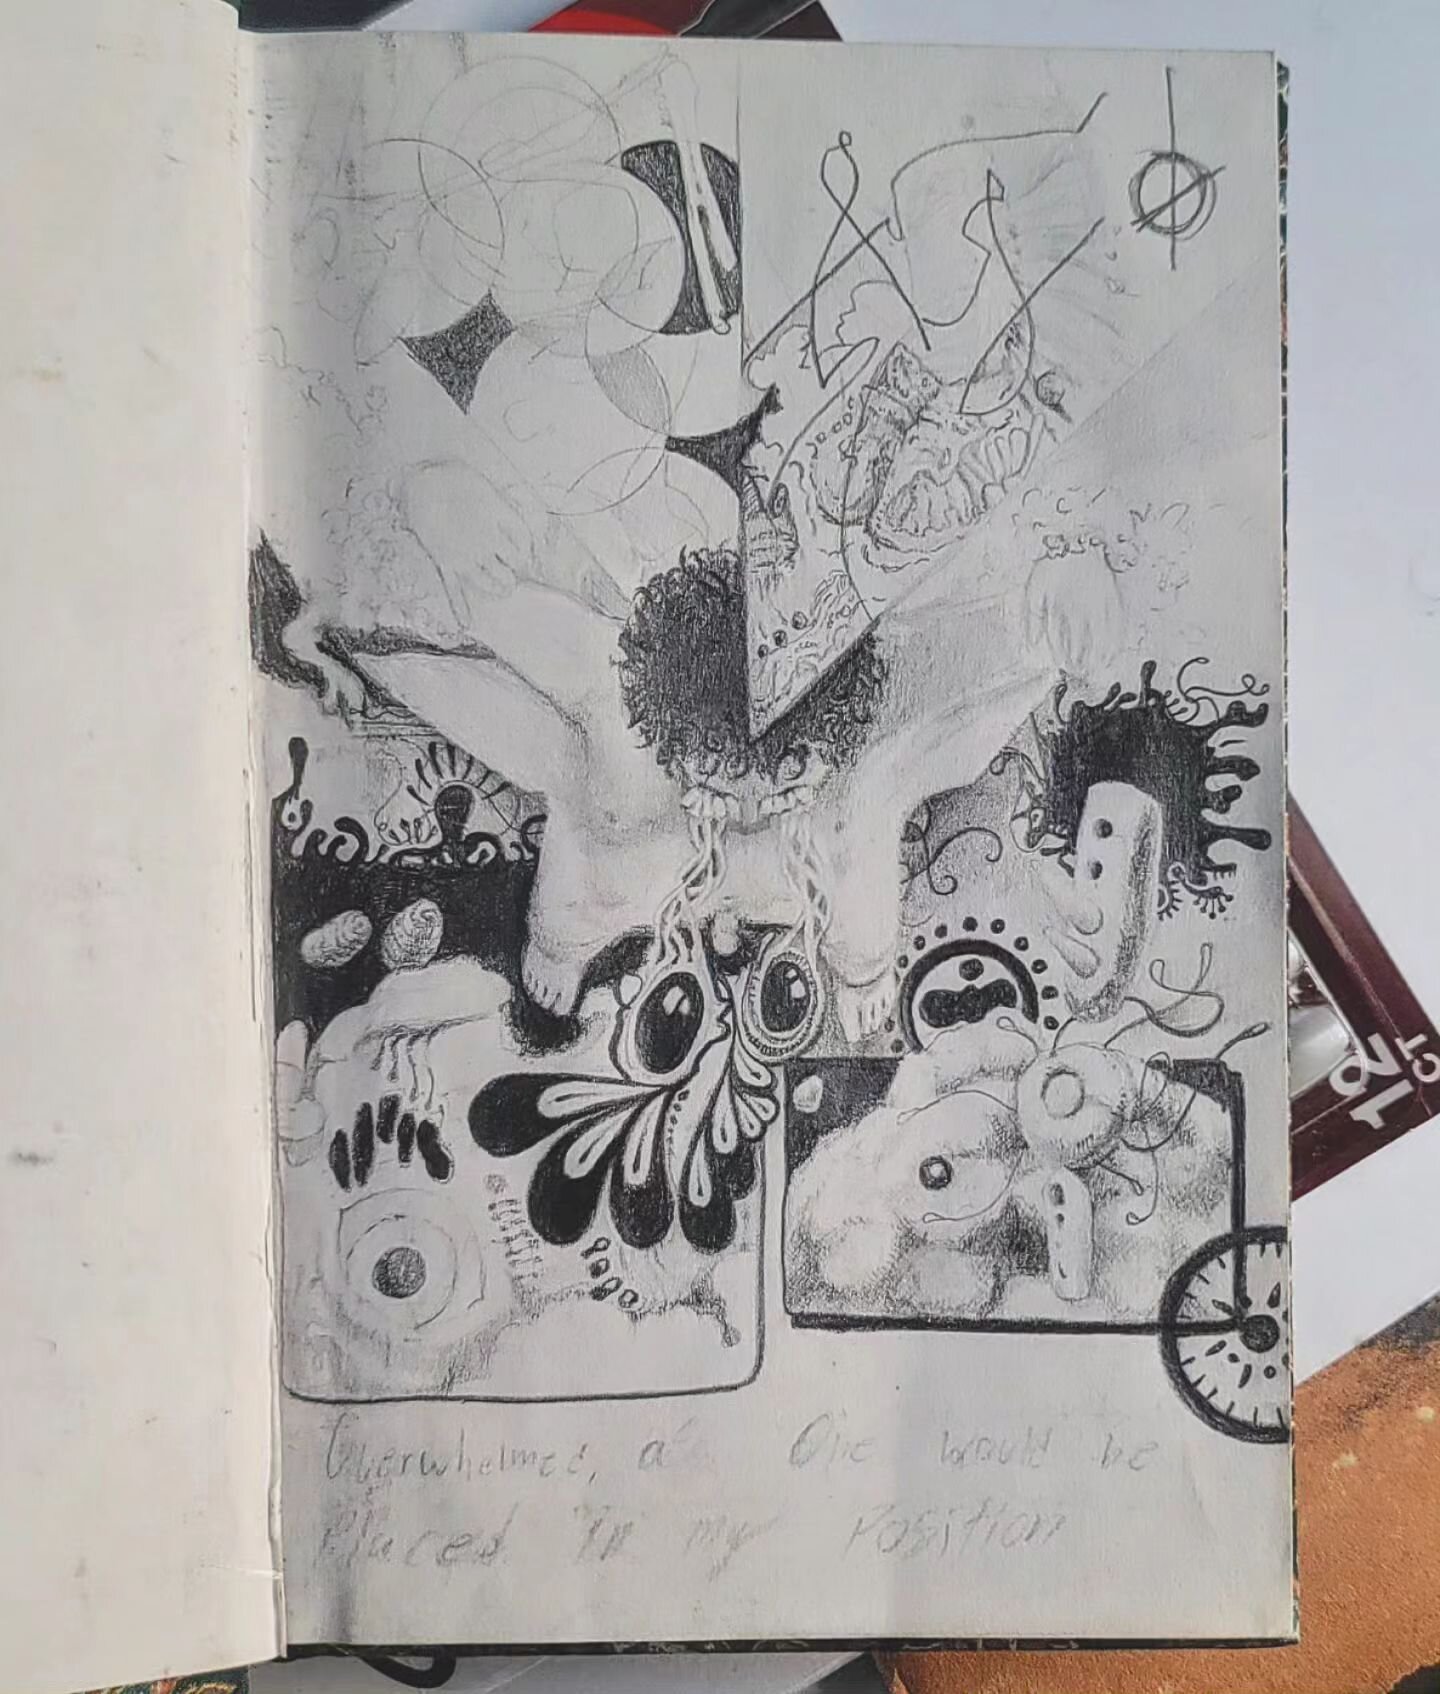 Work in progress... :)
-
-
Enjoy :0
-
-
#pencildraw #graphiteart #workingonit #midsommar #sketchbookpage